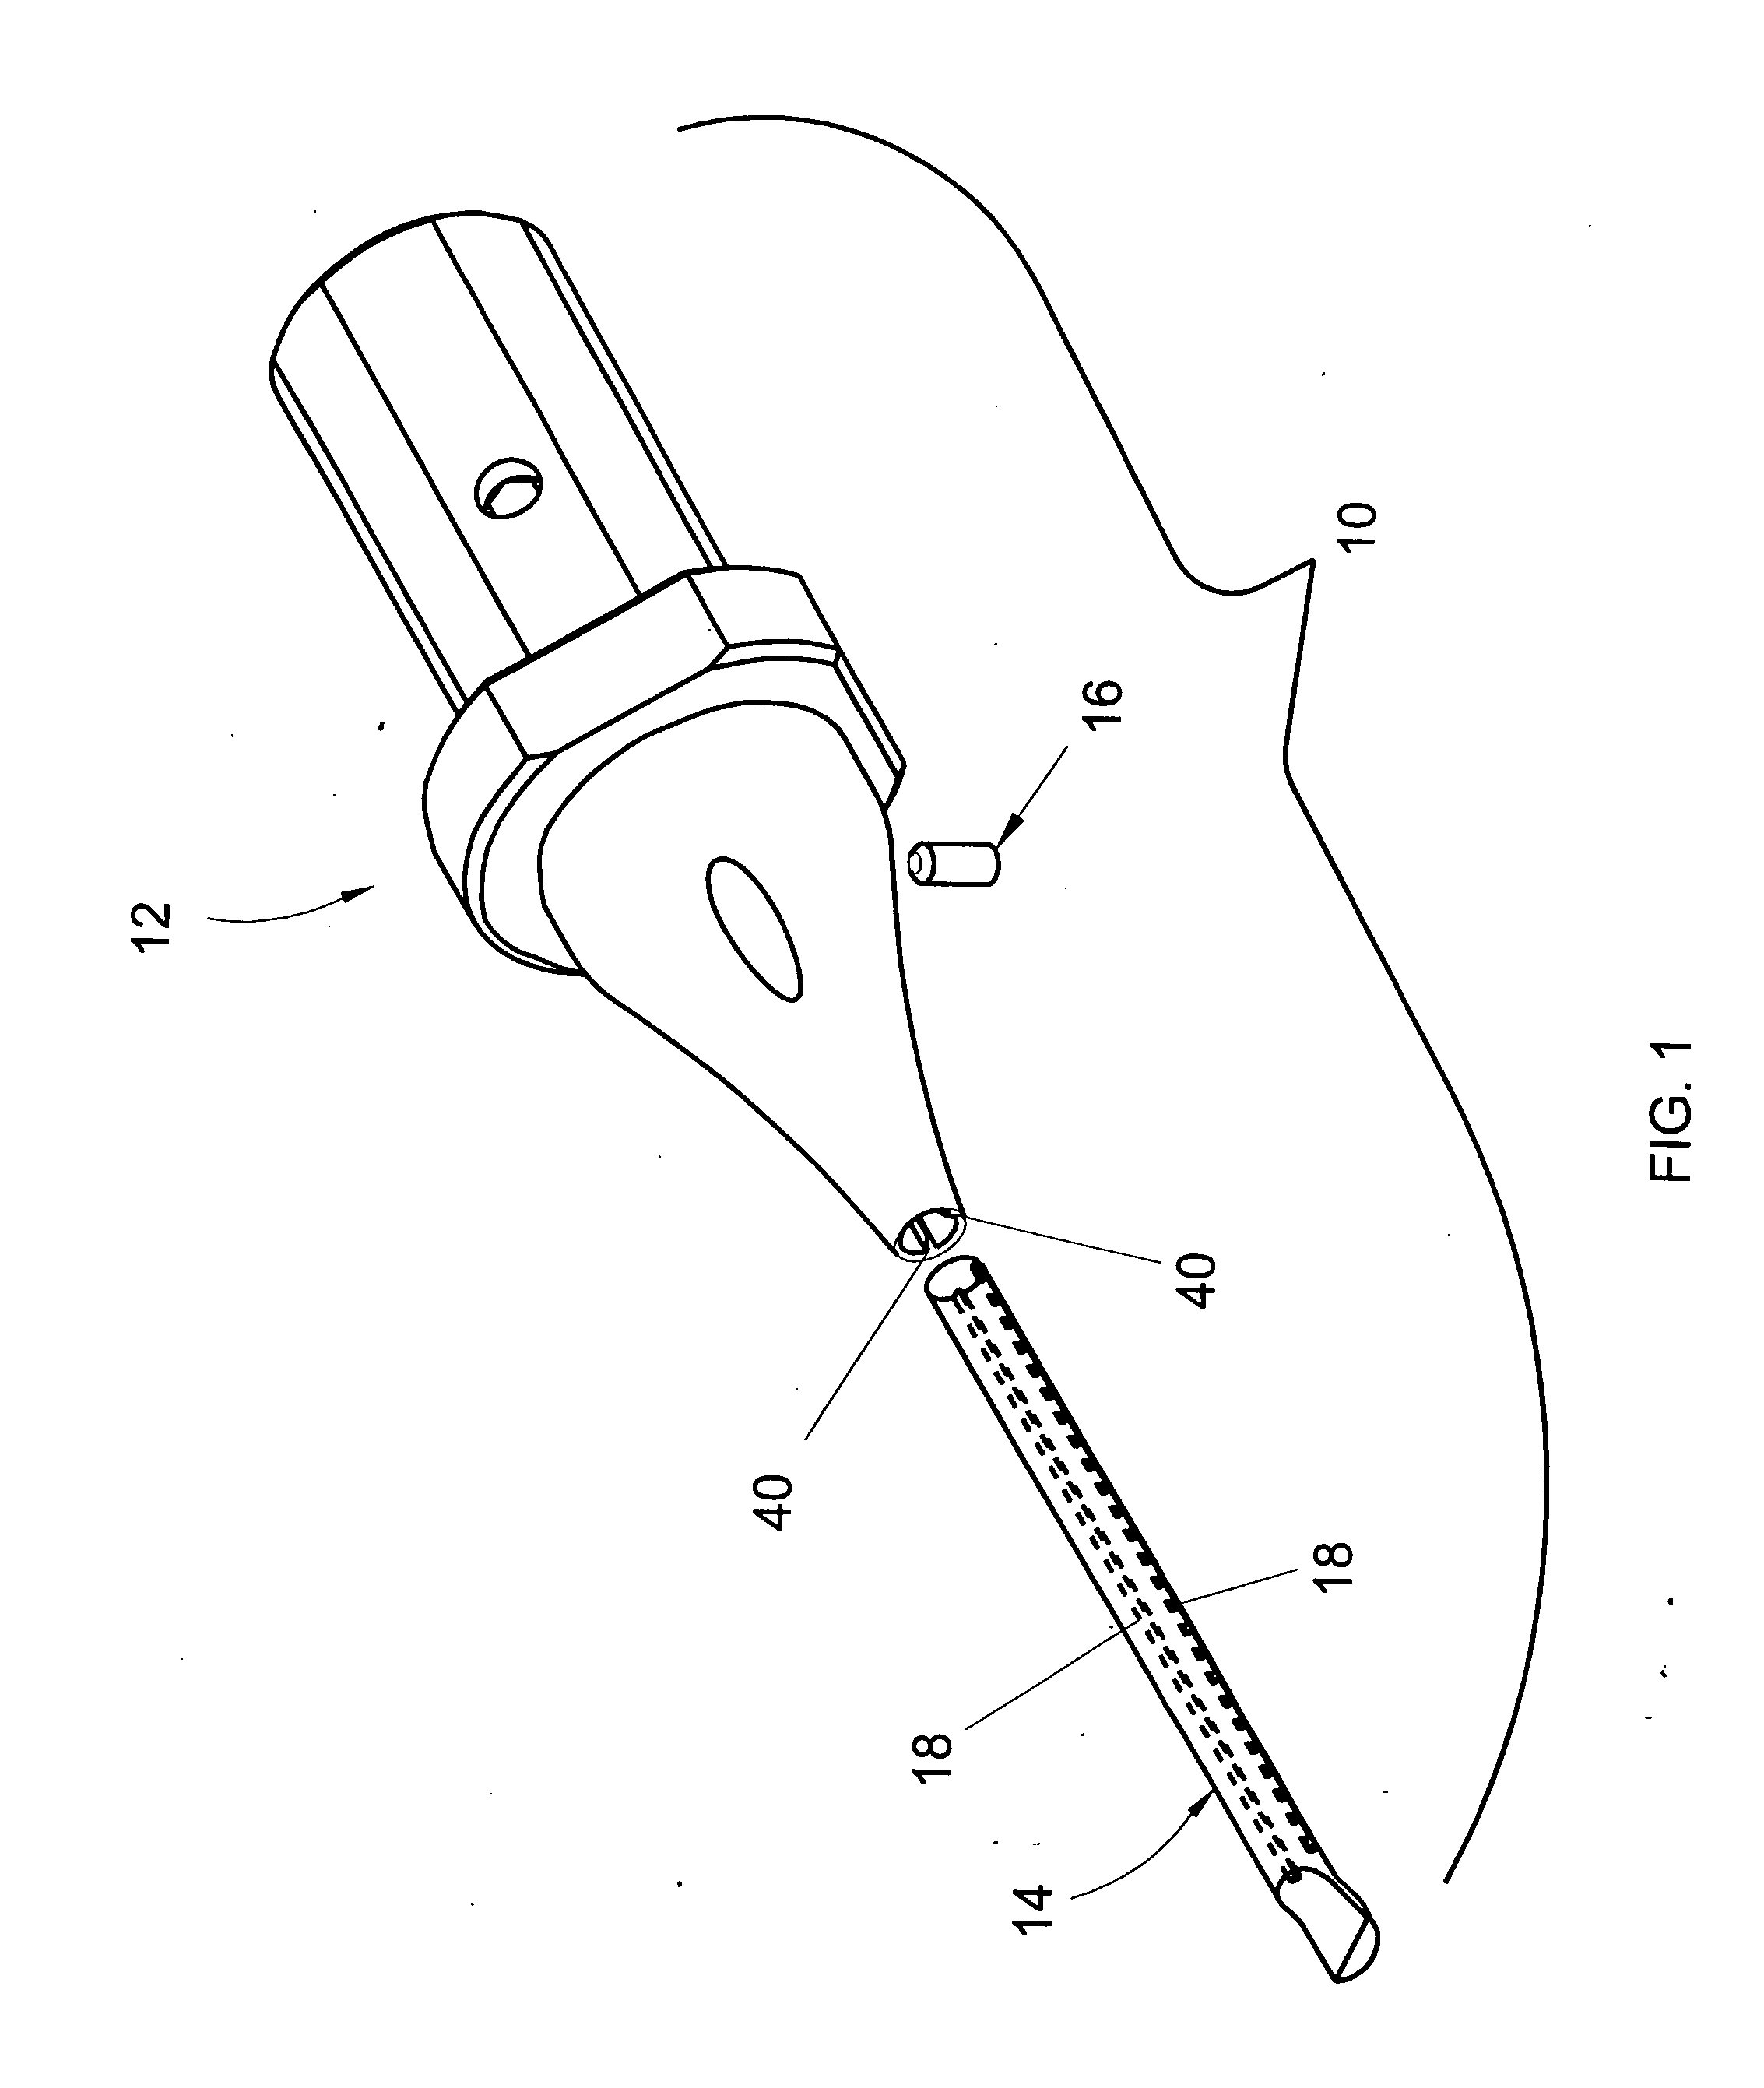 Tool apparatus